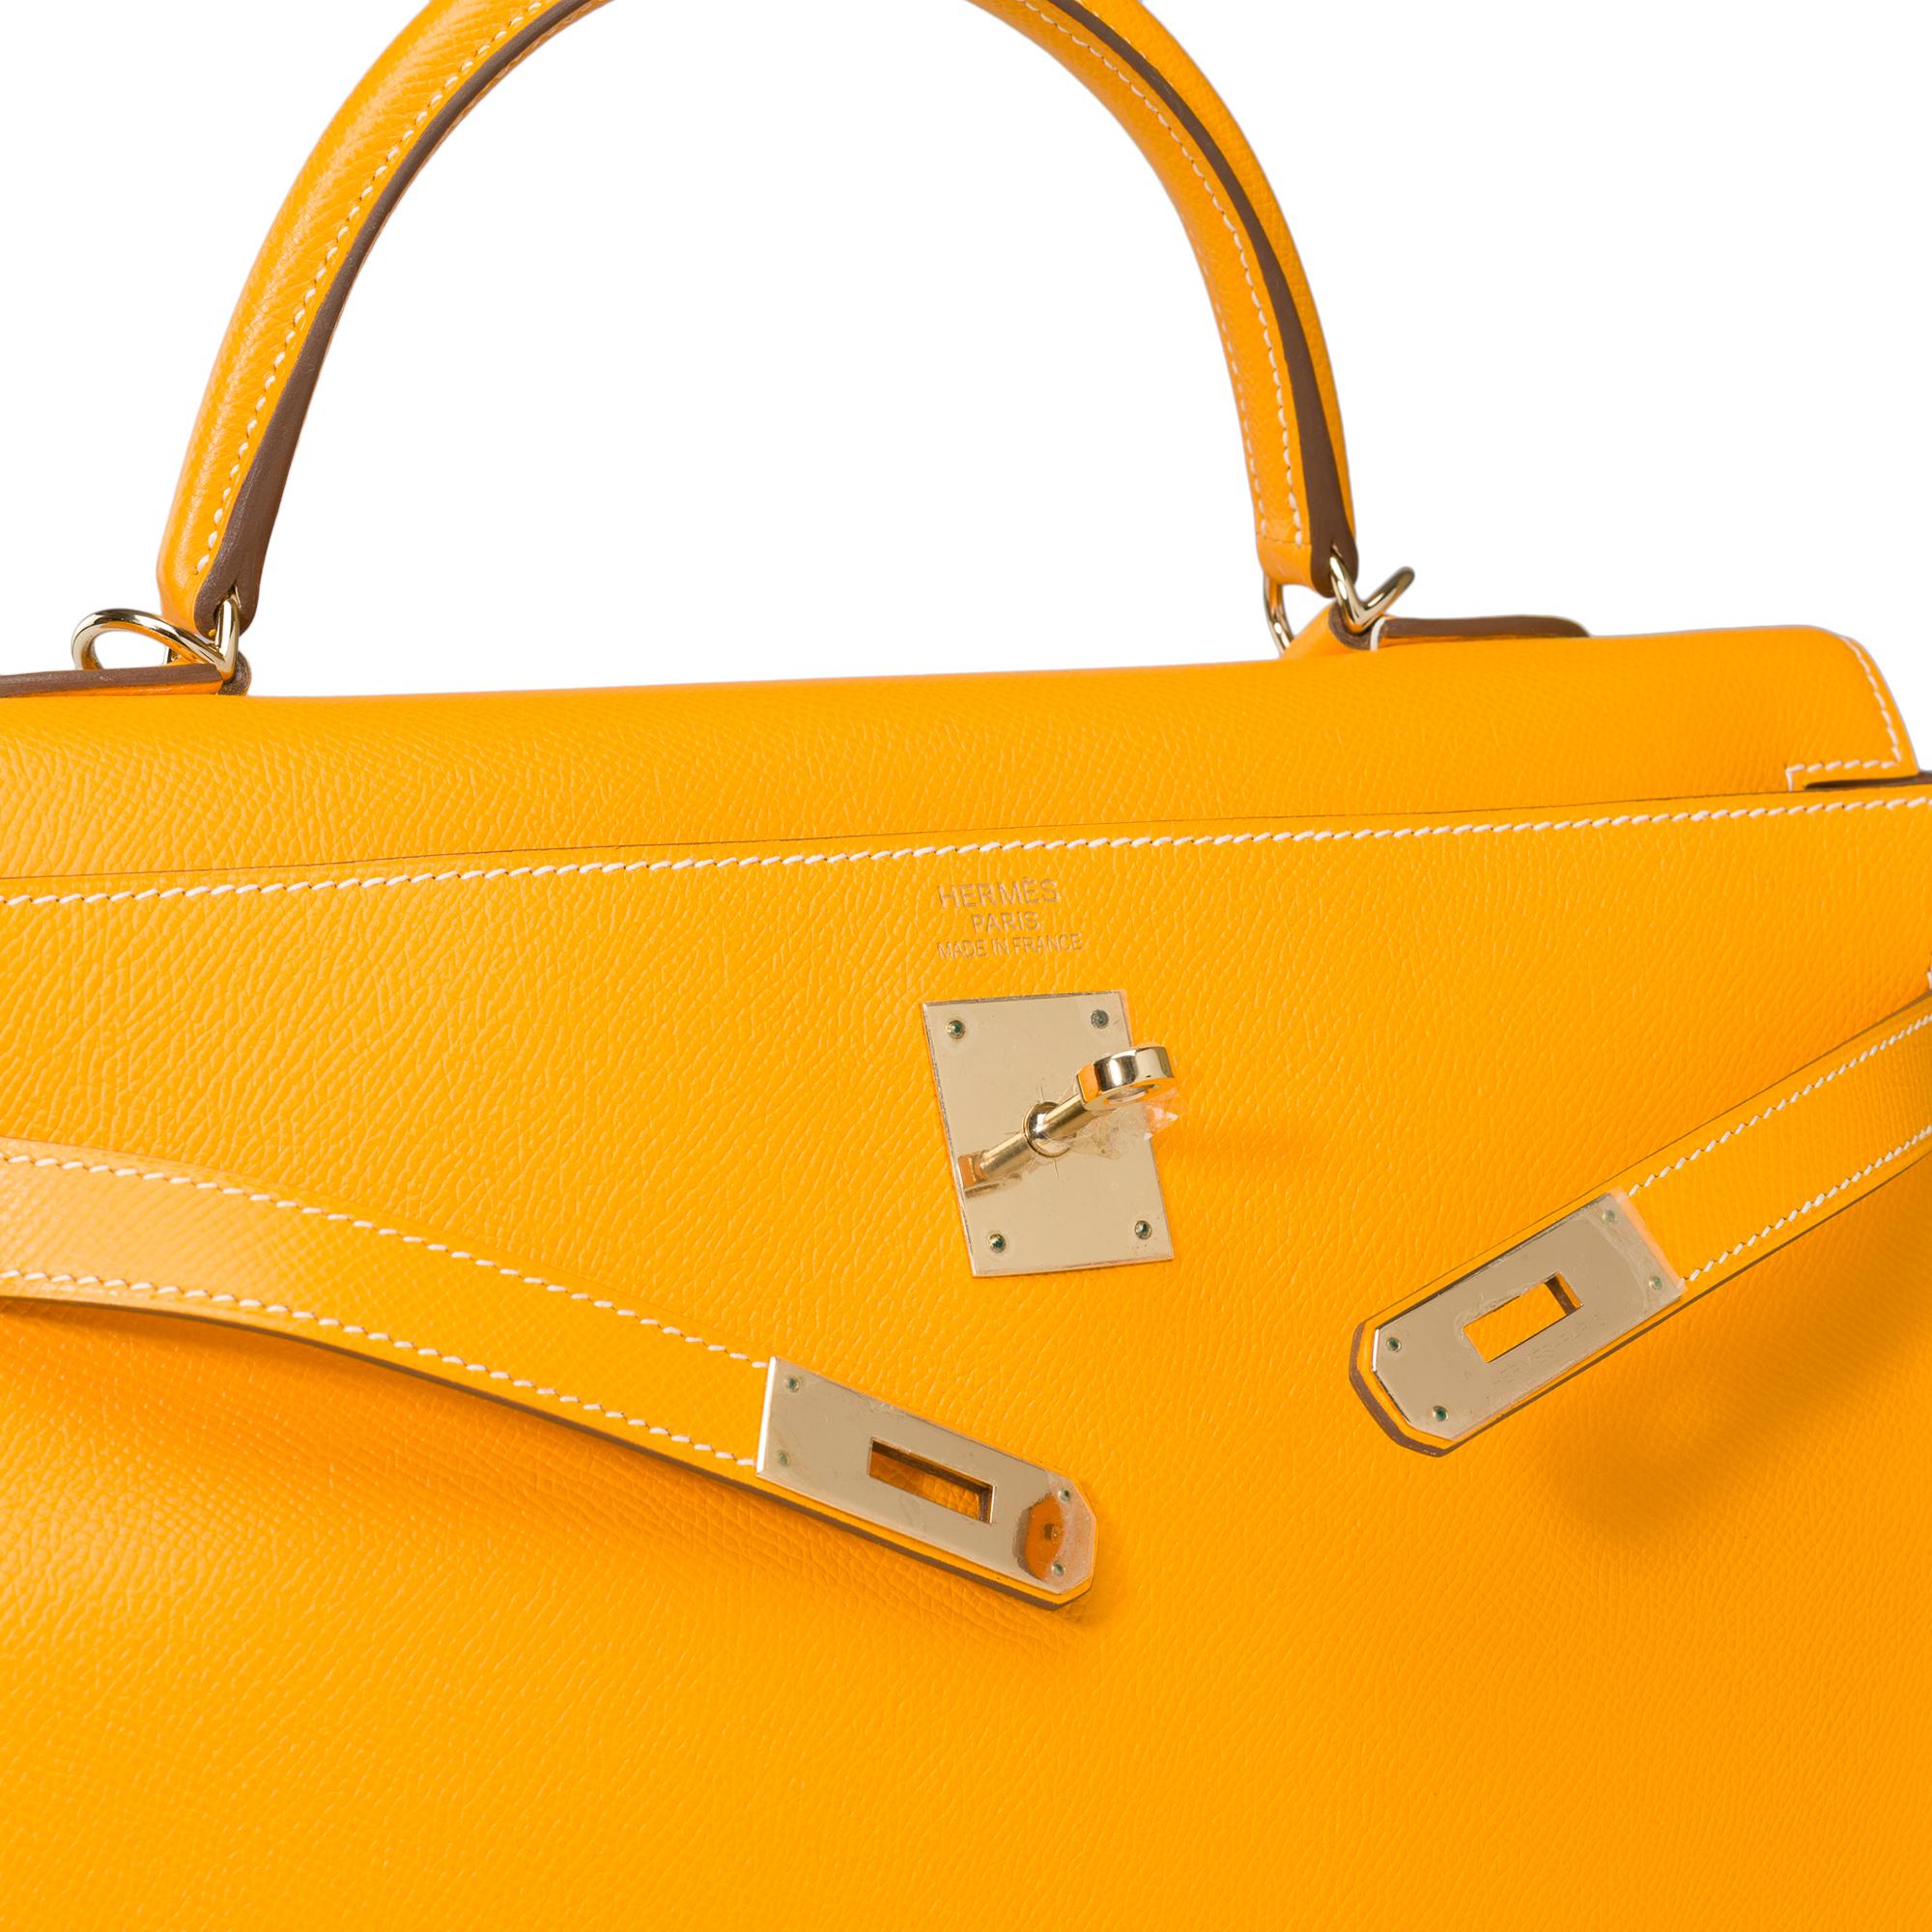 Candy Limited Edition Hermès Kelly 35 handbag strap in Yellow Epsom leather, GHW 3